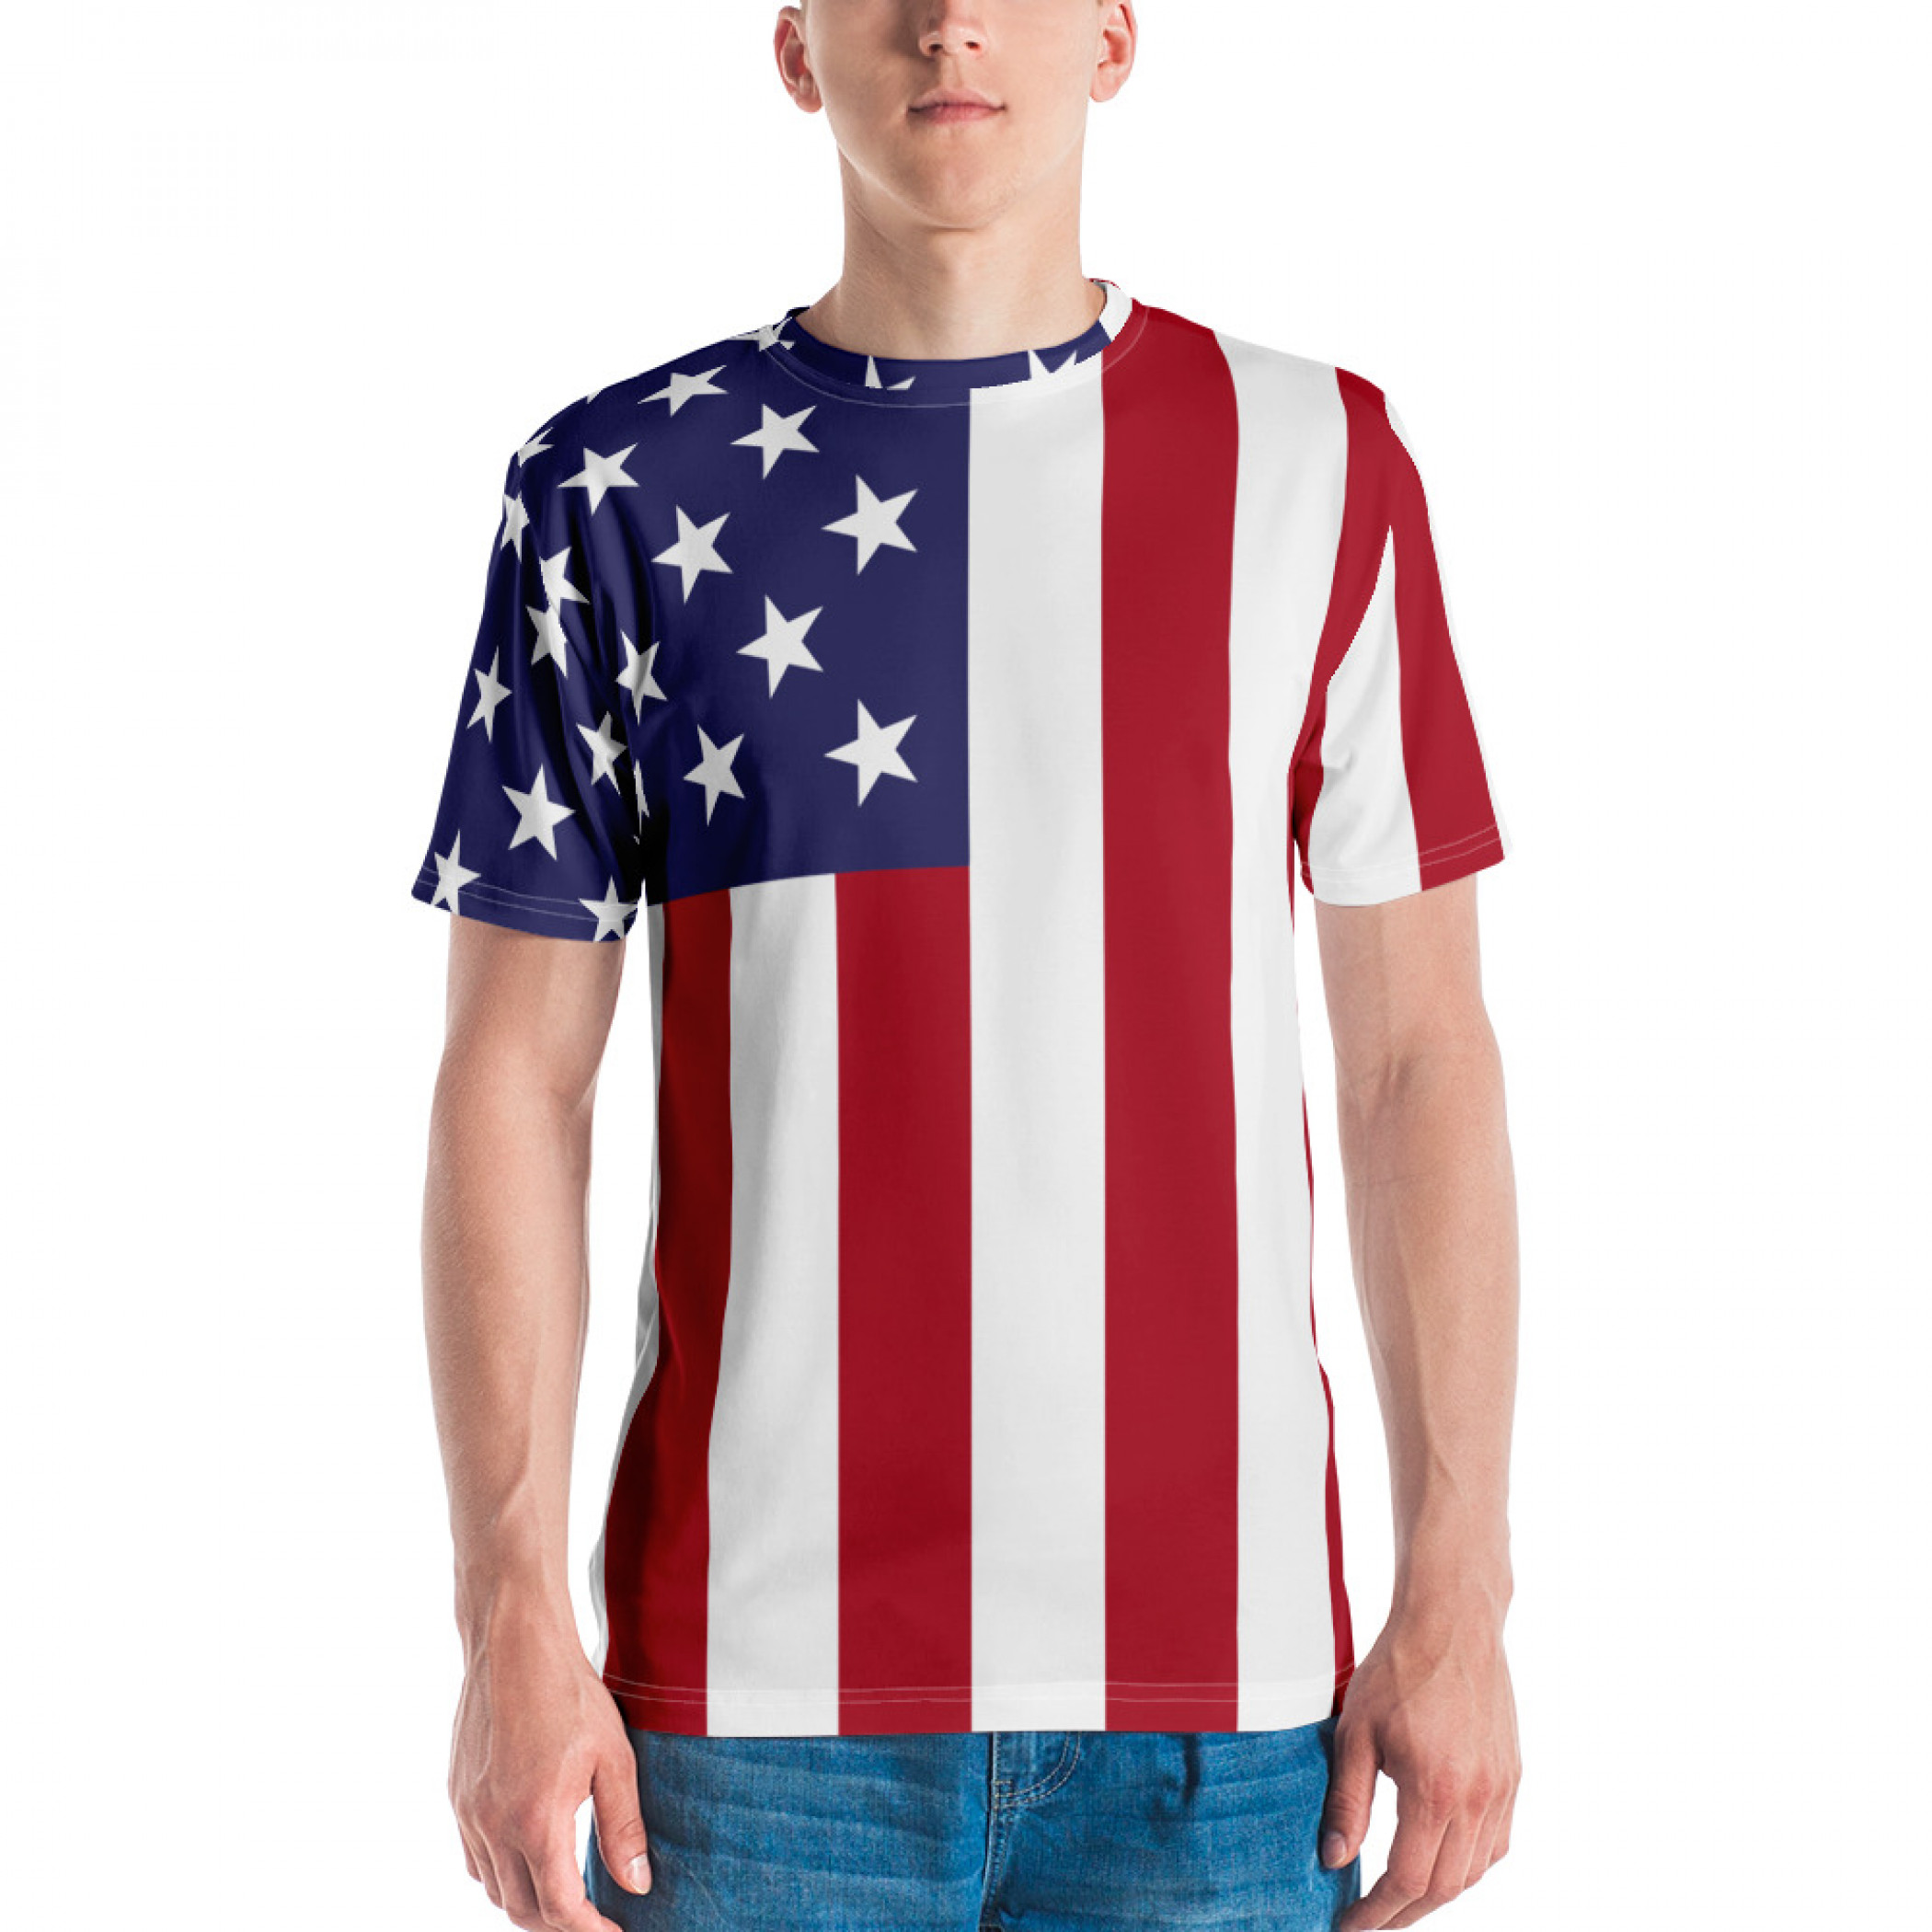 Old Glory American Flag T-Shirt